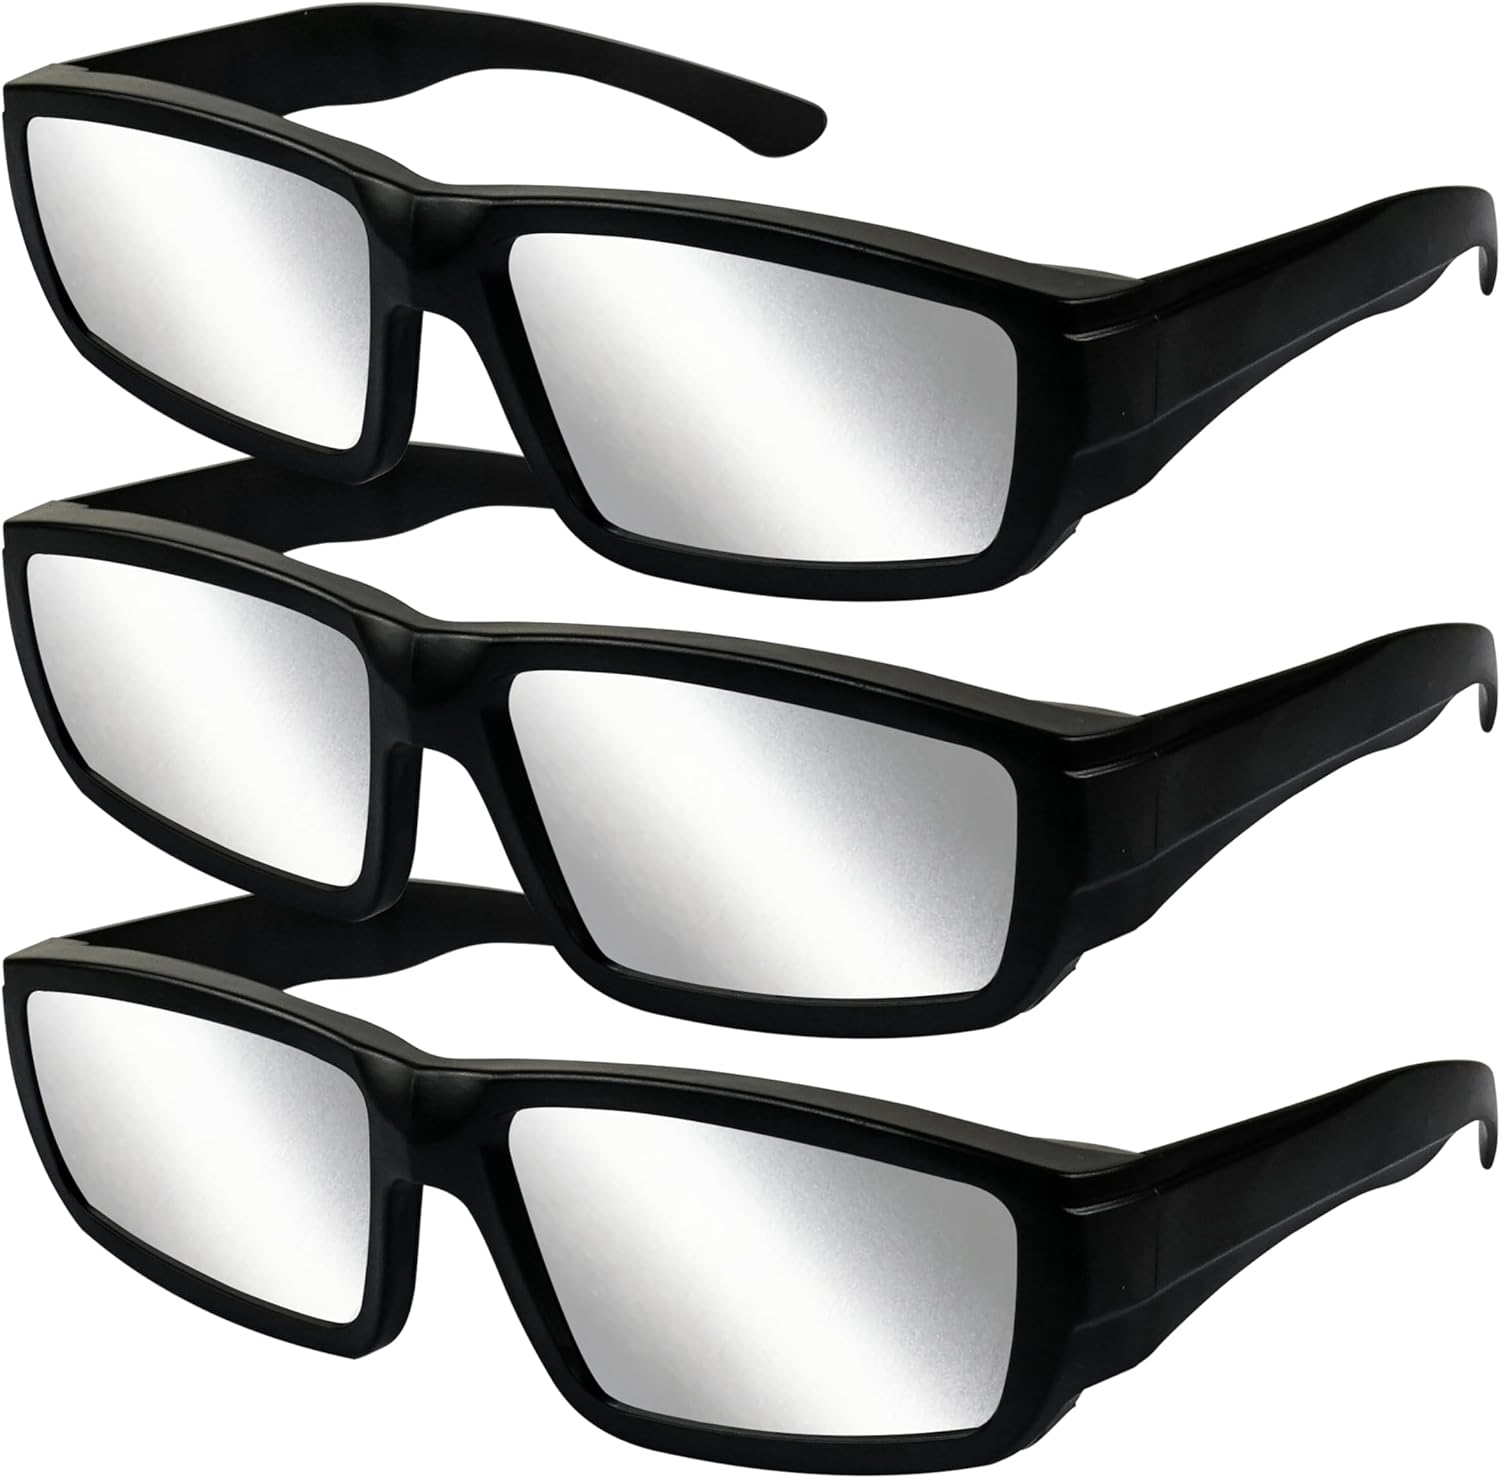 Professional Solar Eclipse Glasses - Durable Plastic - Eclipse Glasses for Direct Sun Viewing